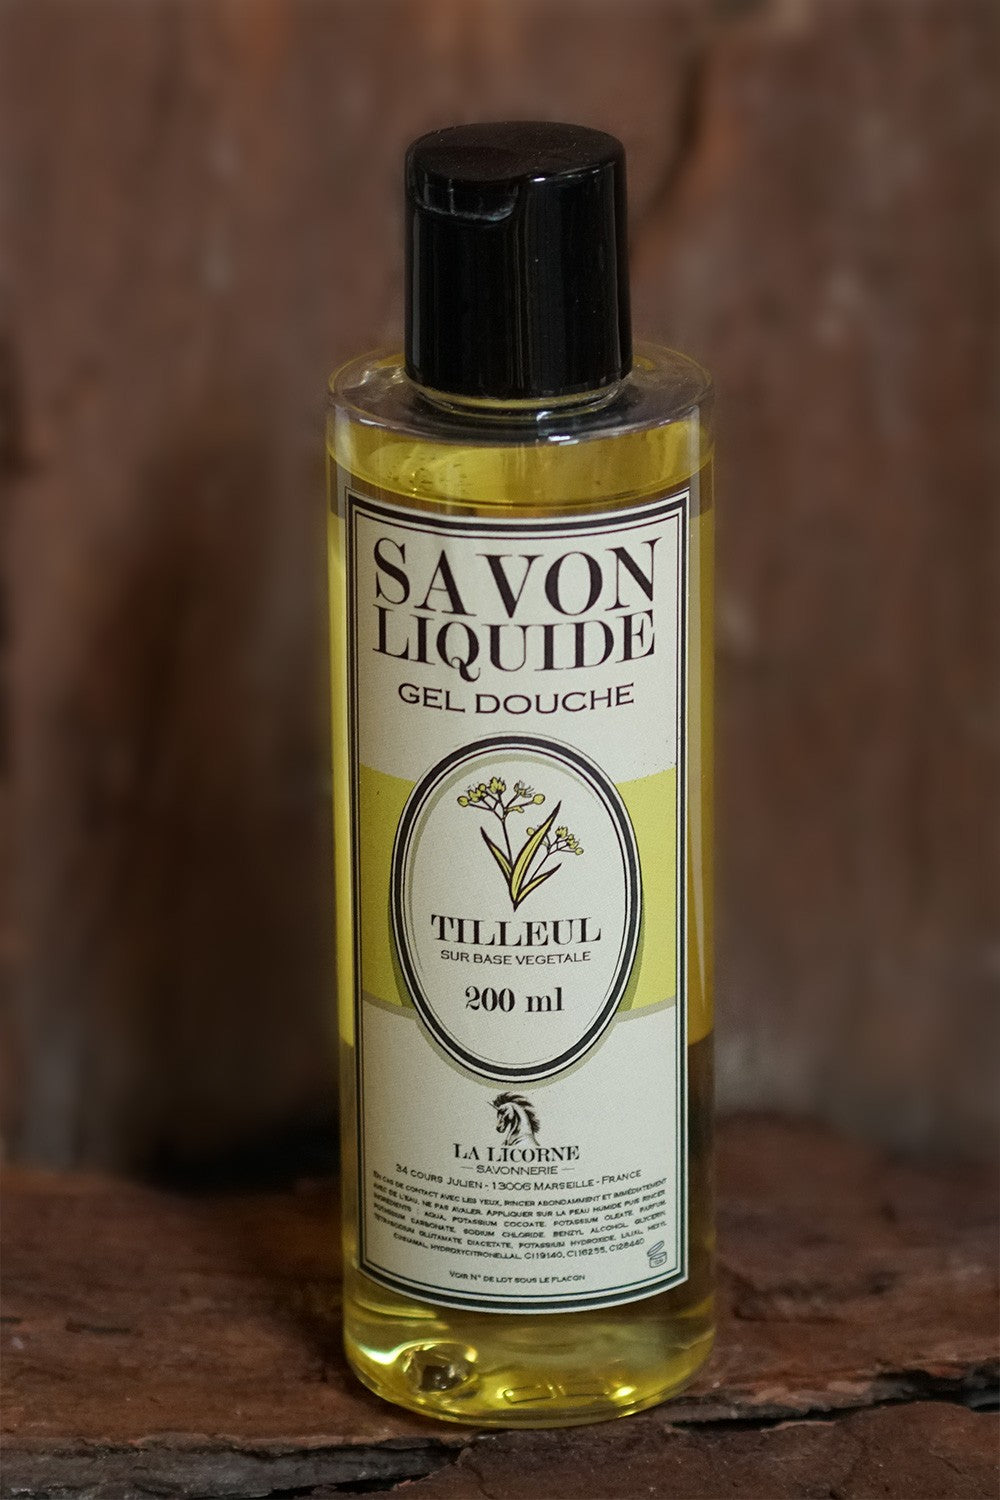 Liquid soap/shower gel - 200ml Tilleul